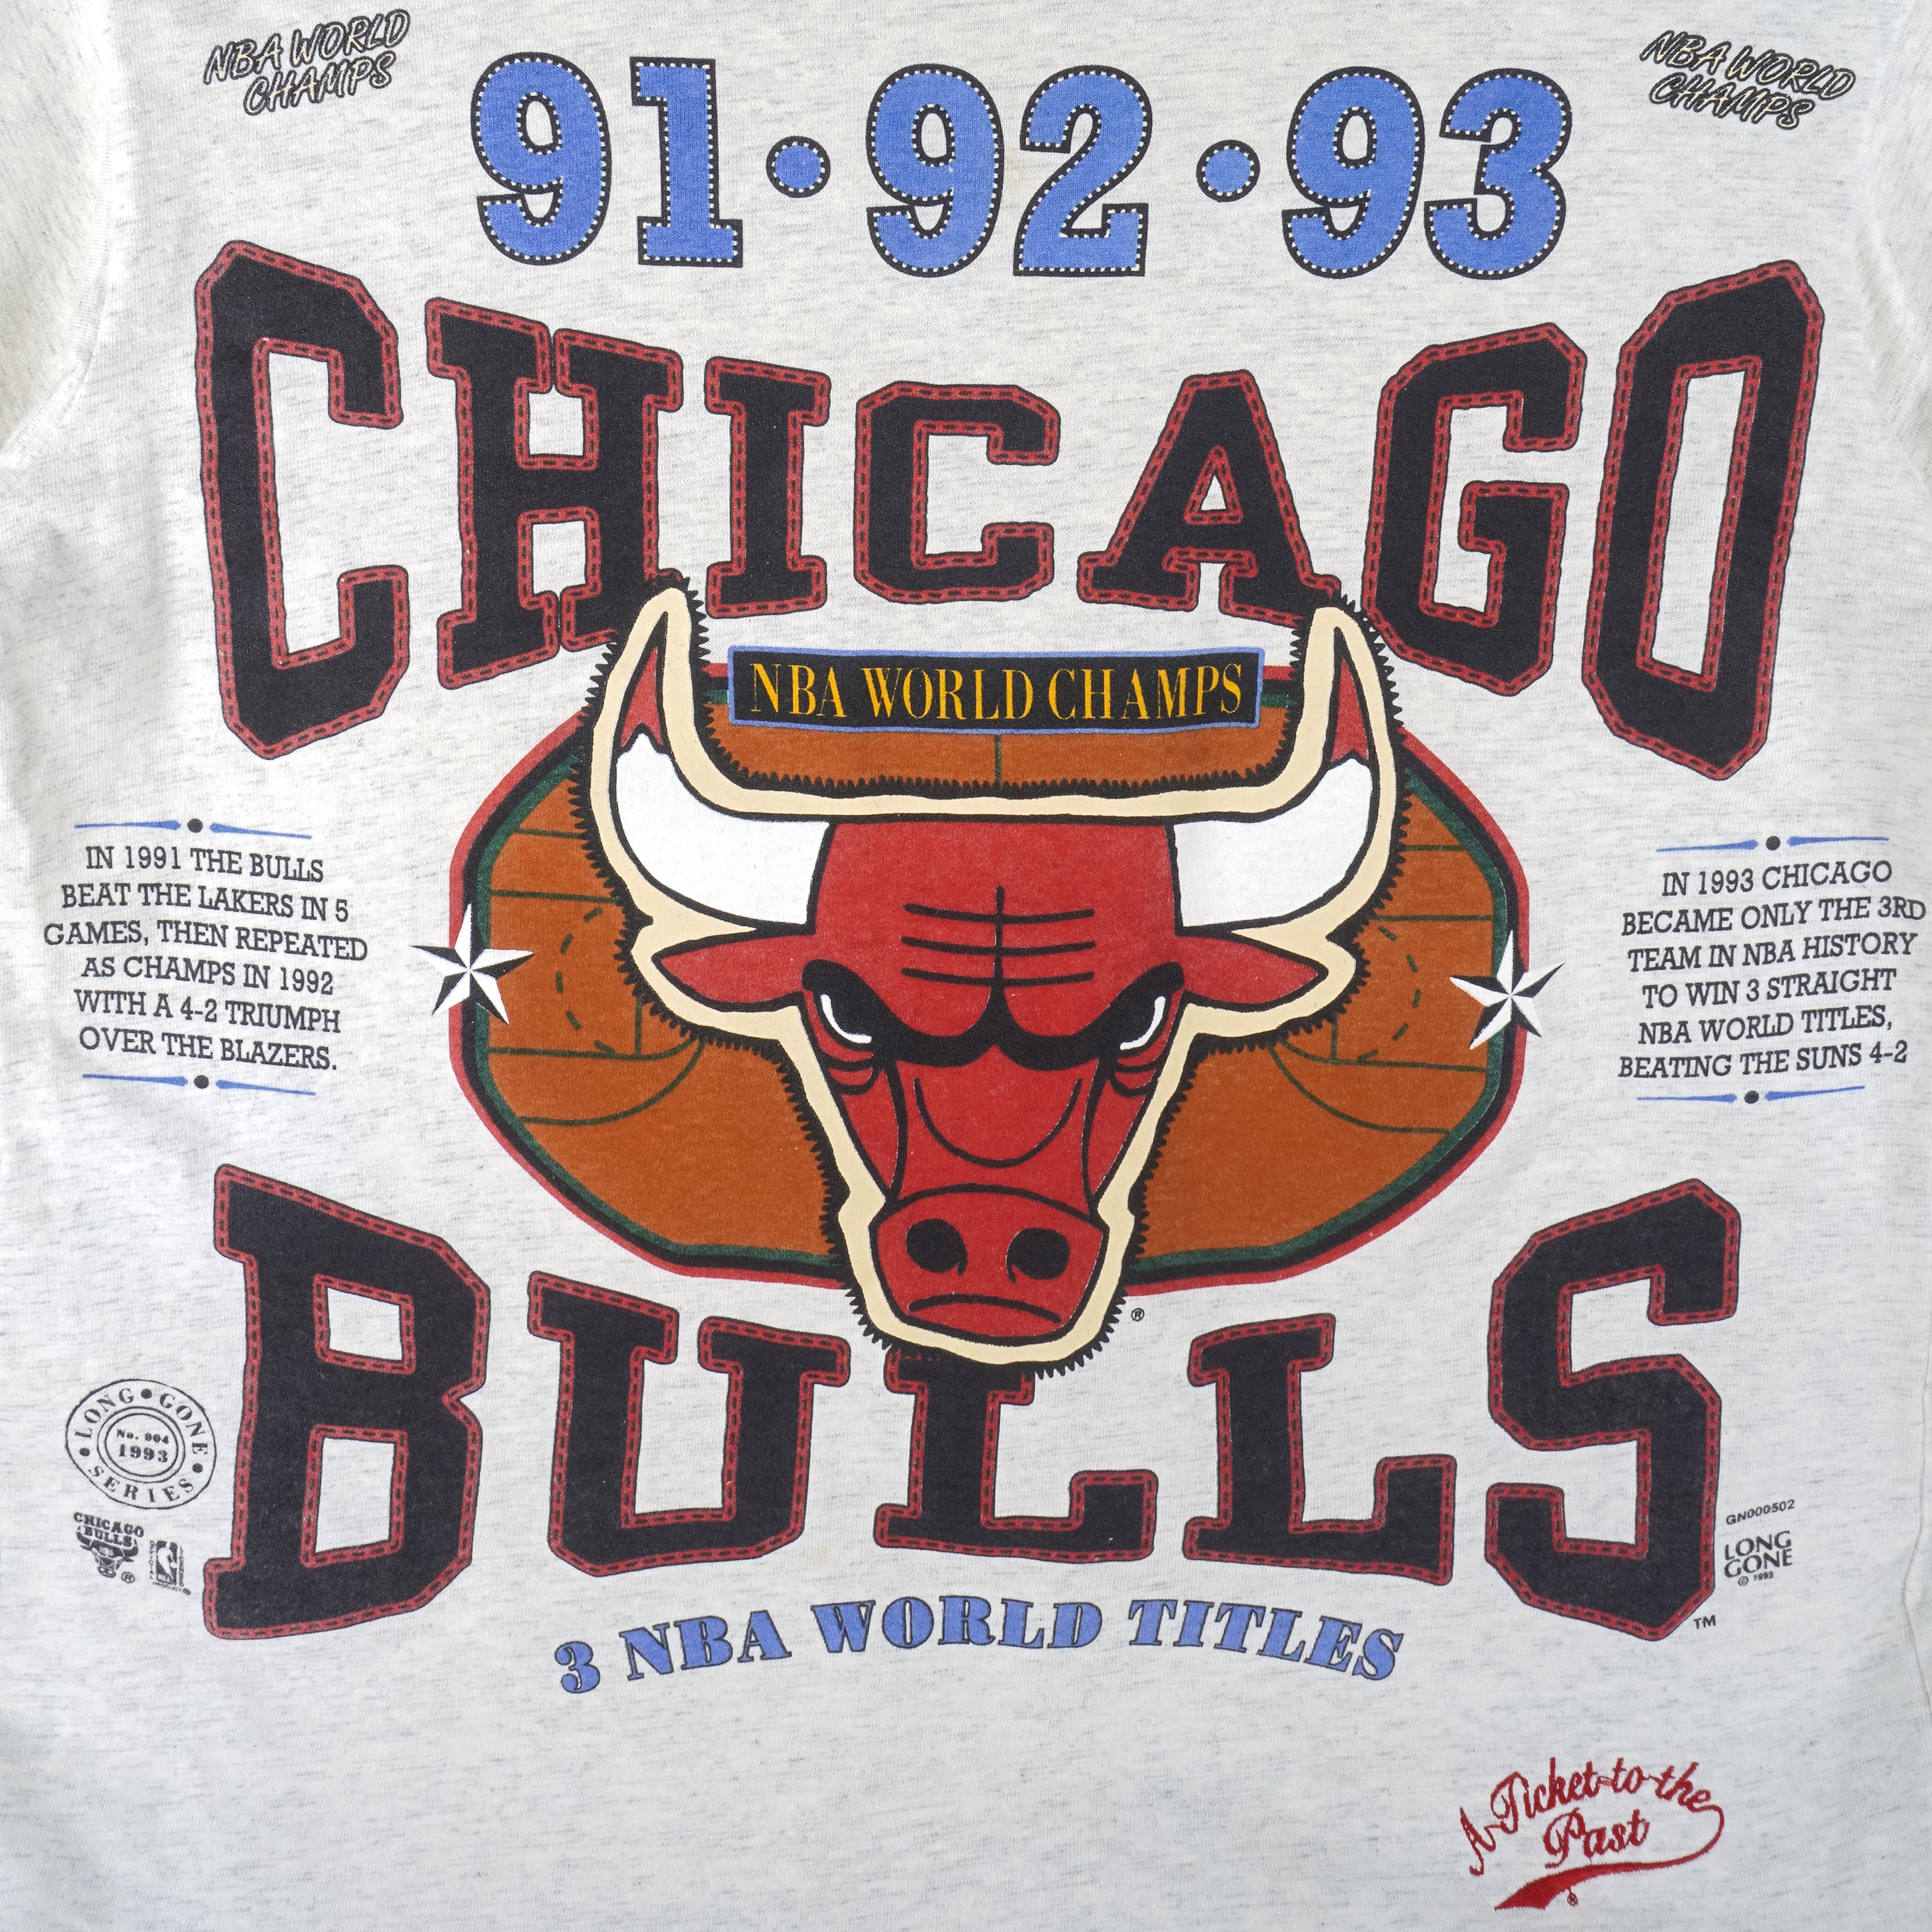 Vintage Chicago Bulls 3-Peat Red T-Shirt Sz. L